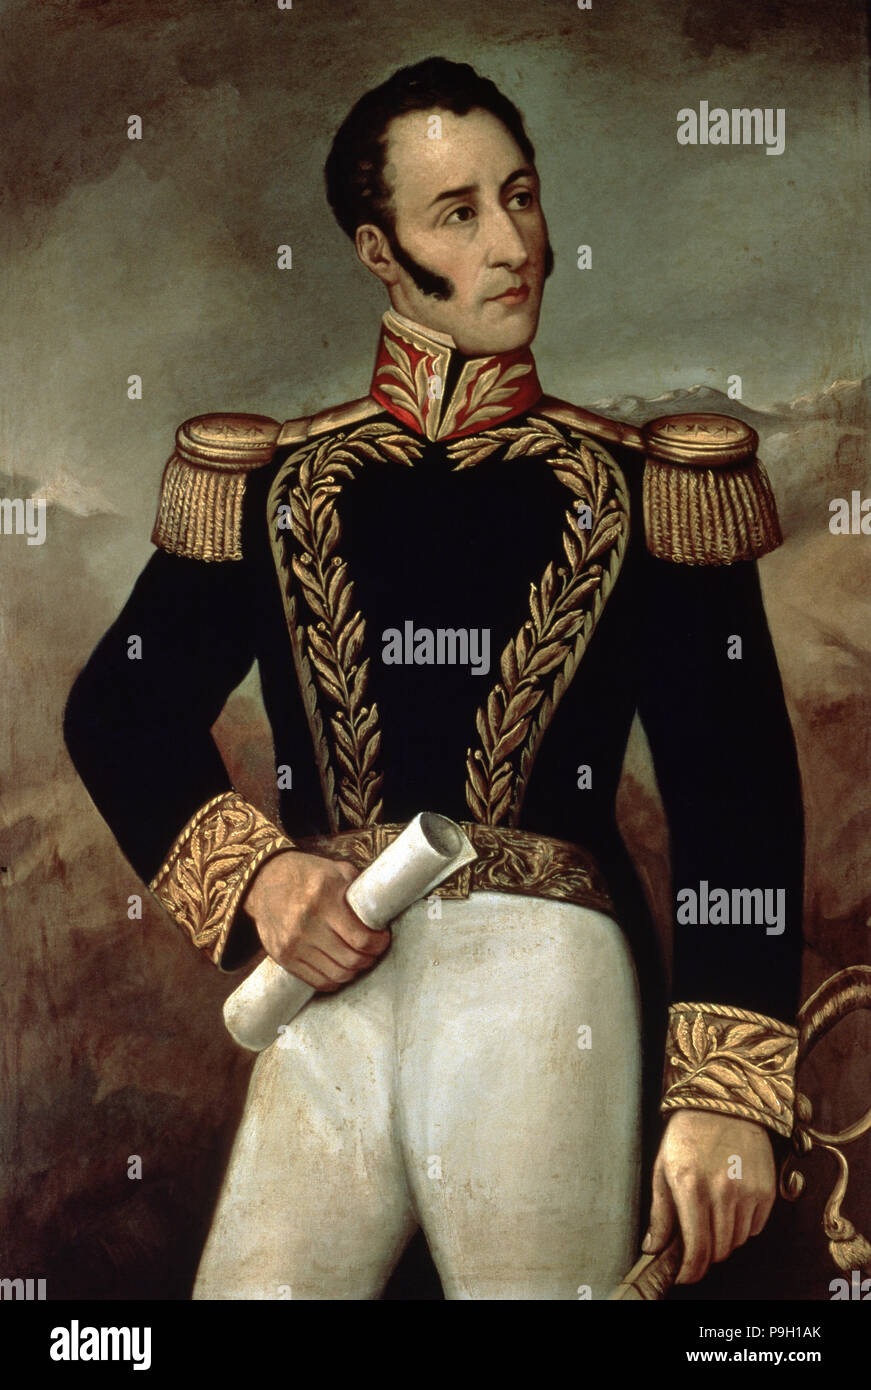 Antonio Jose de Sucre (1795-1830), politician and hero of American independence. Stock Photo